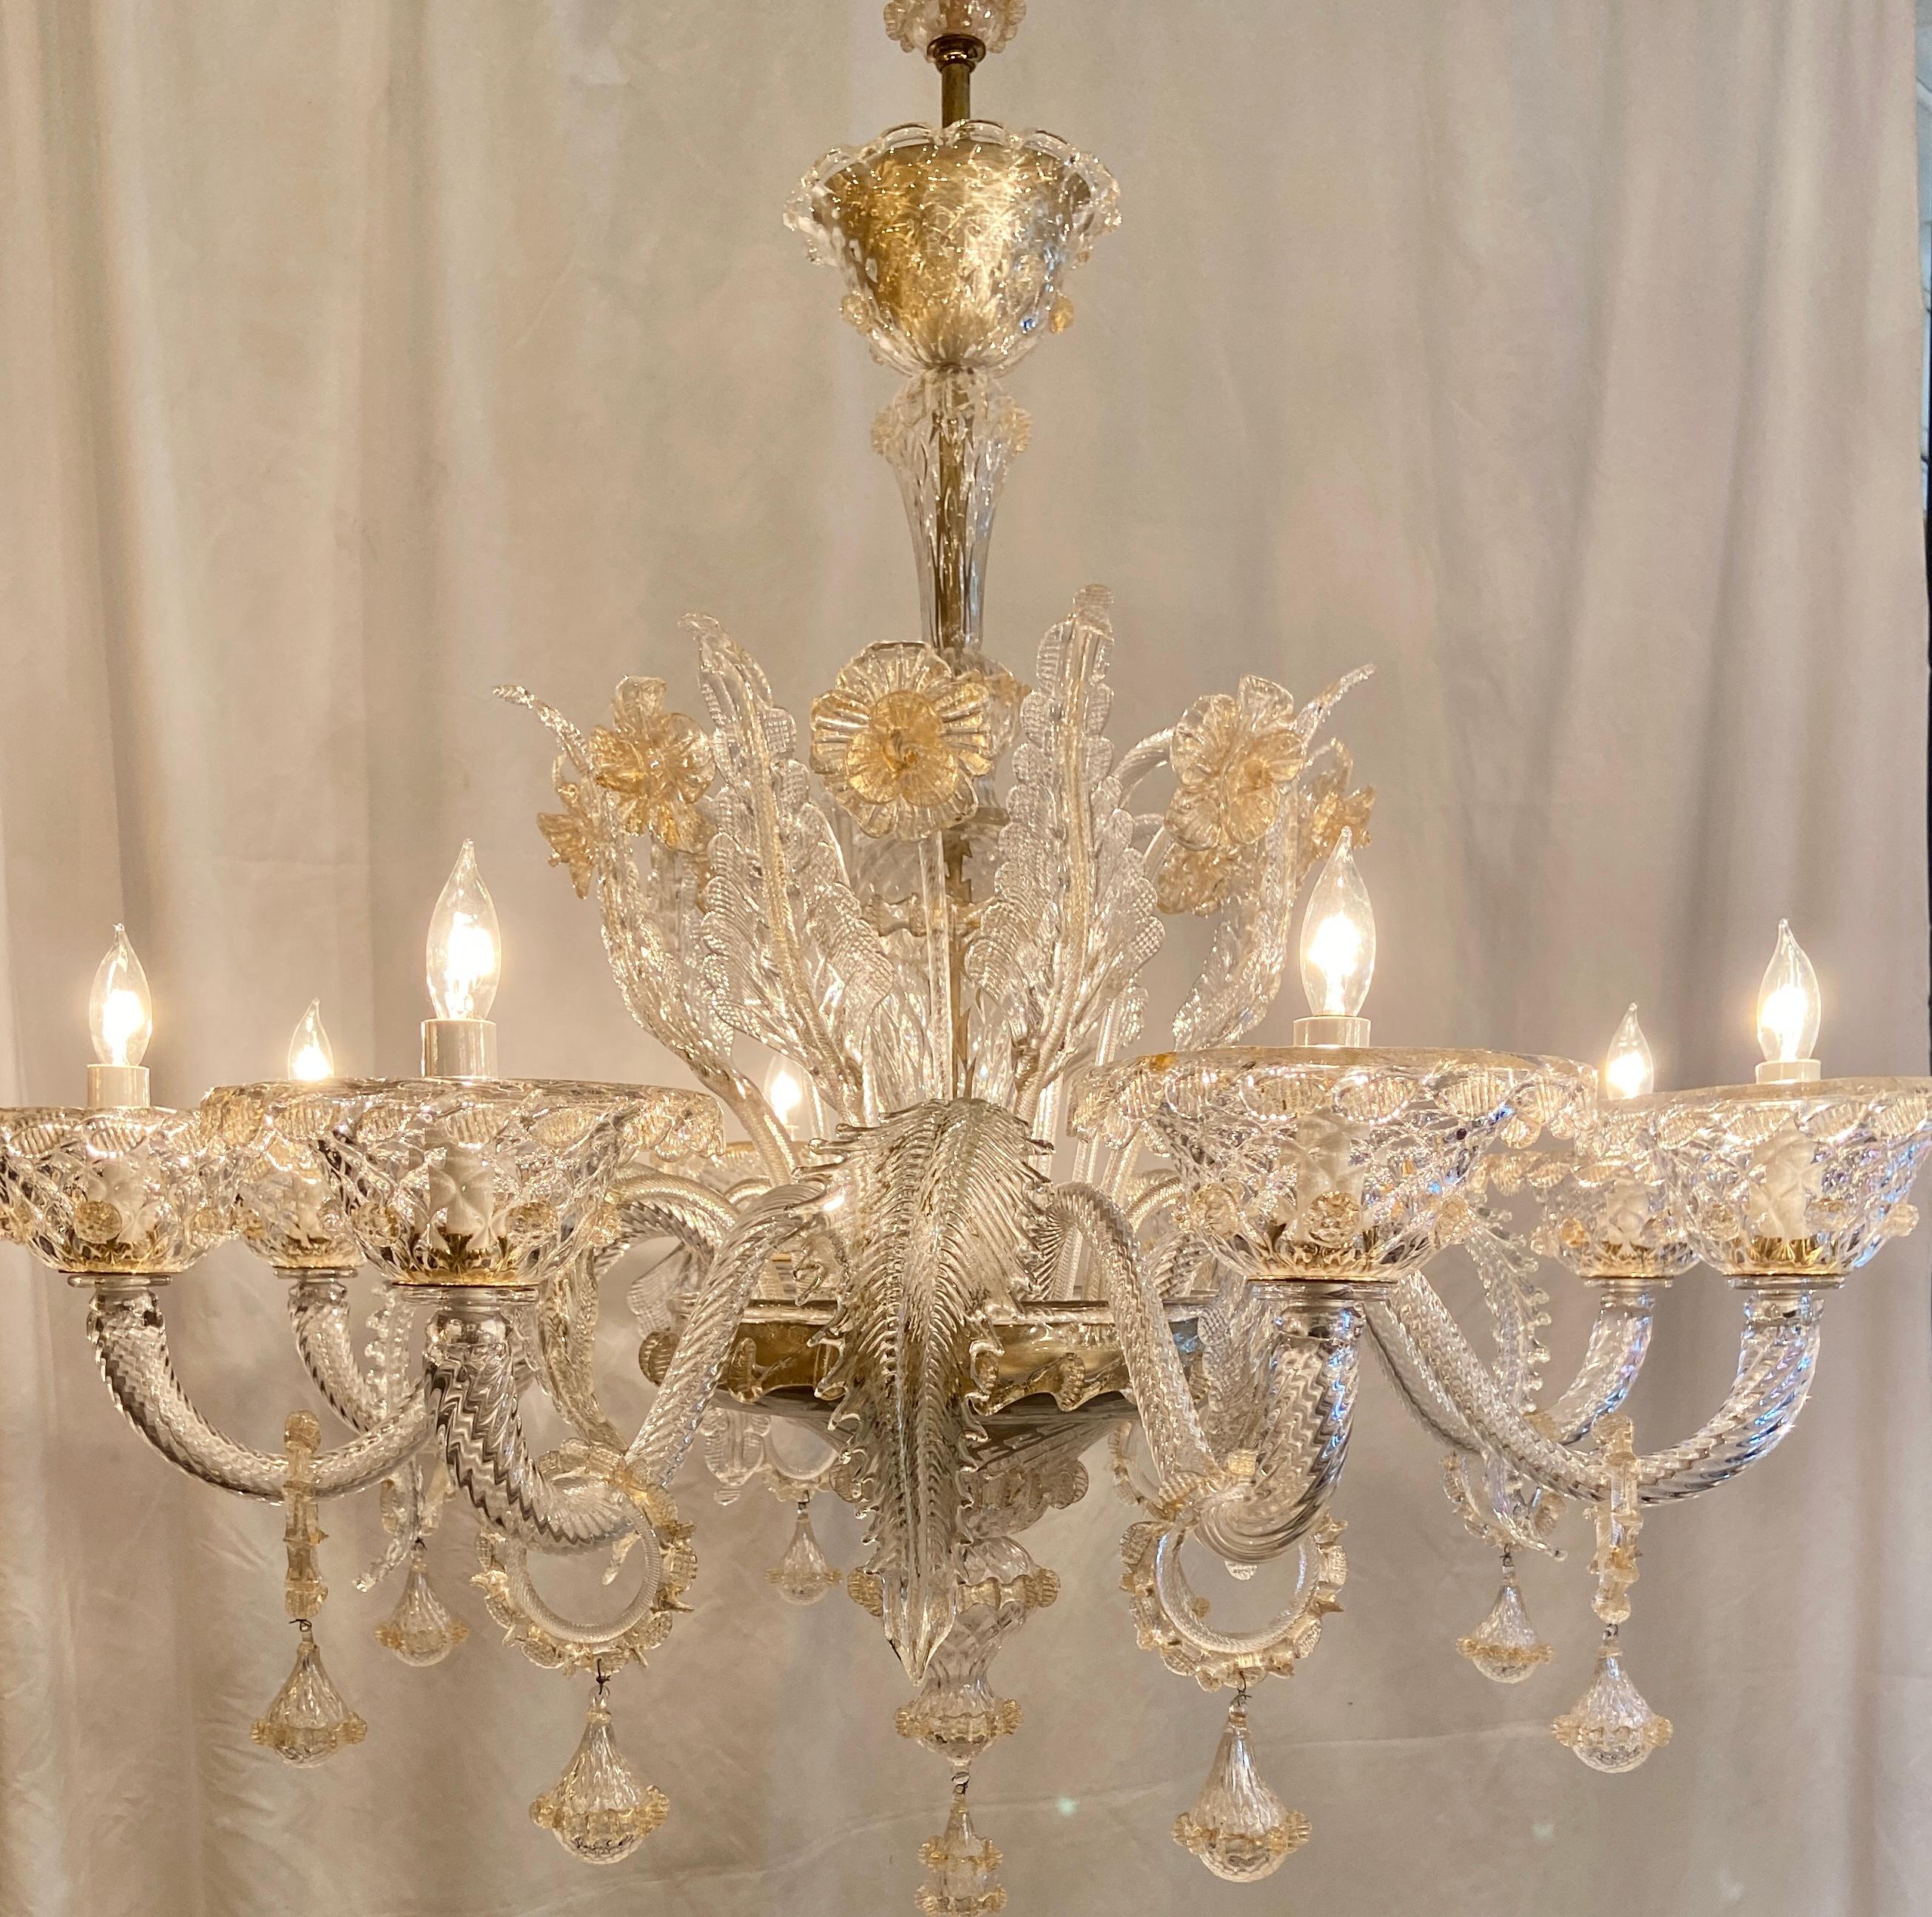 20th Century Antique Italian Venetian Glass 8-Light Chandelier, Circa 1930s-1940s